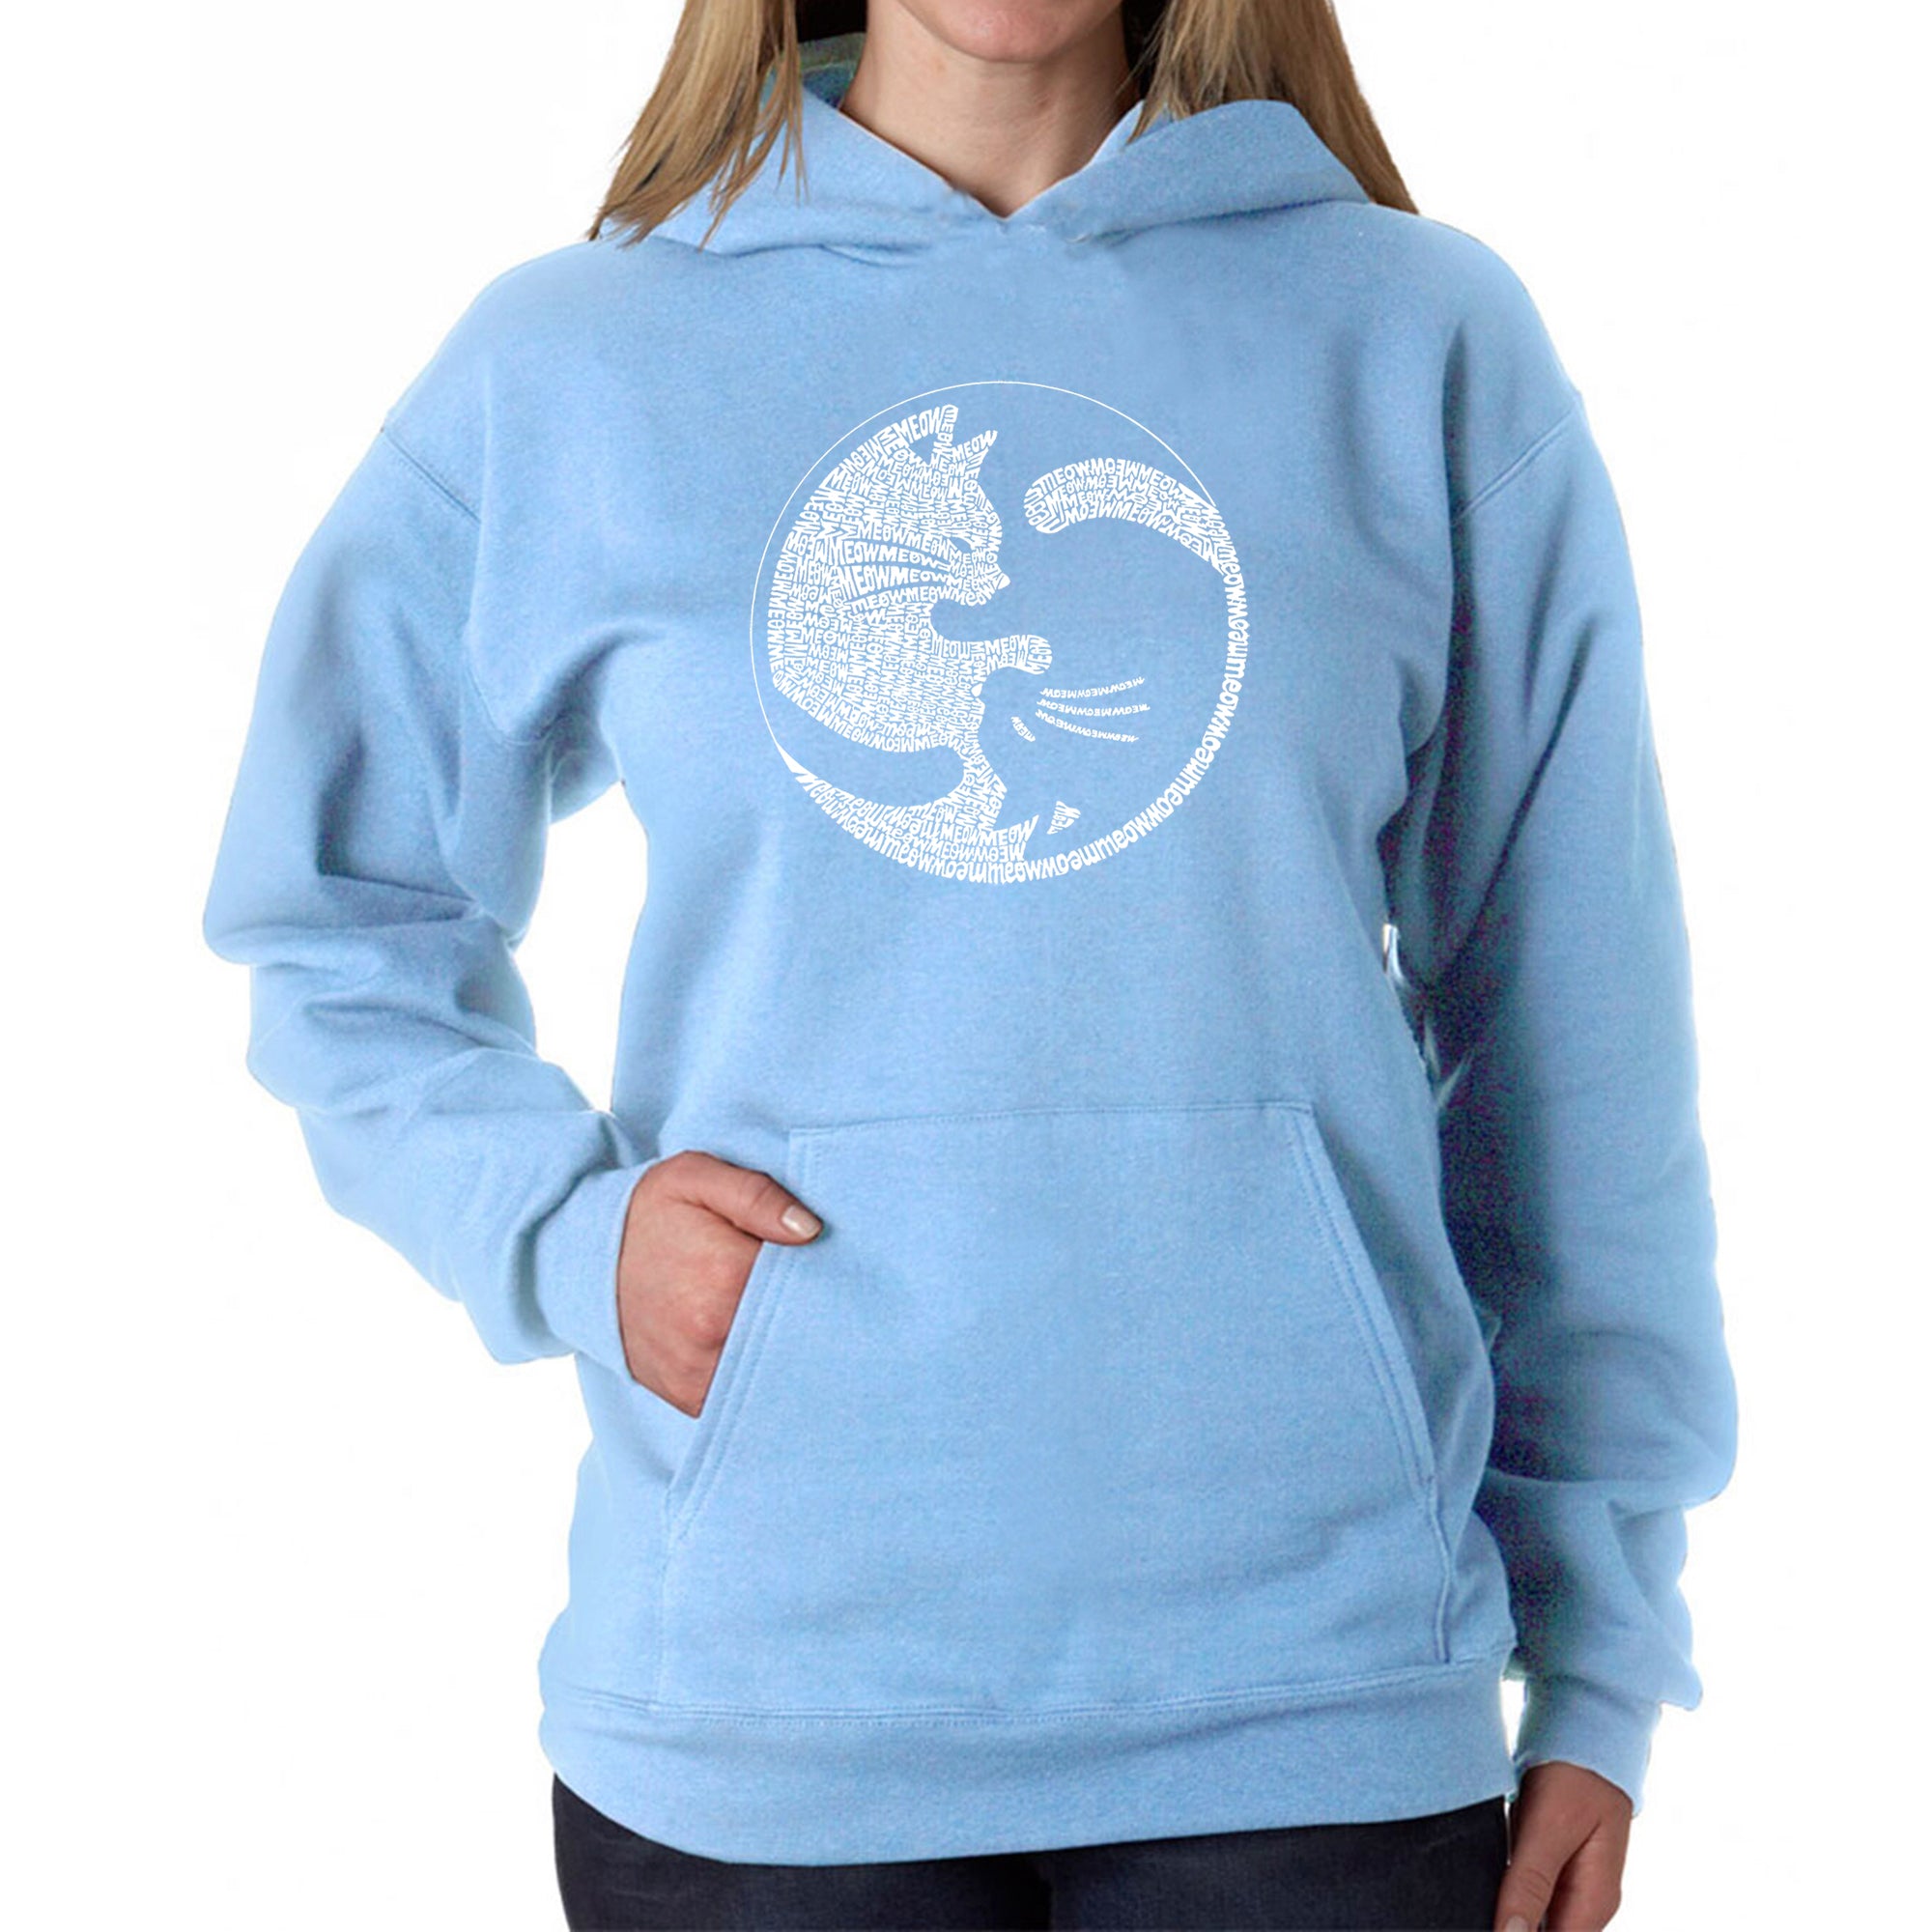 Yin Yang Cat - Women's Word Art Hooded Sweatshirt - Blue - XX-Large